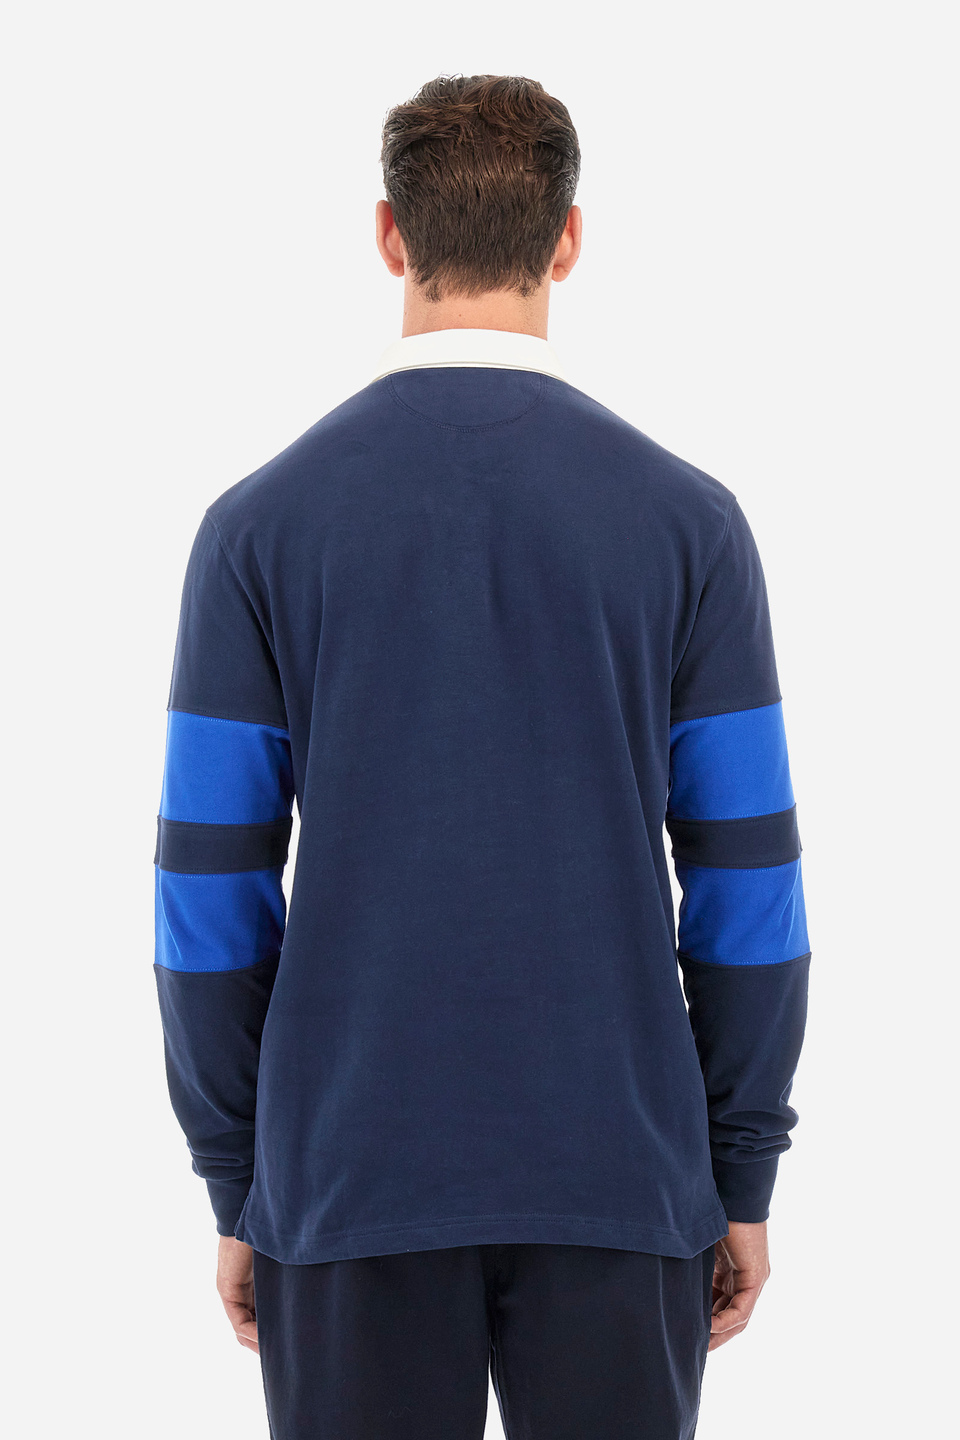 Men's comfort-fit polo shirt - Welby | La Martina - Official Online Shop